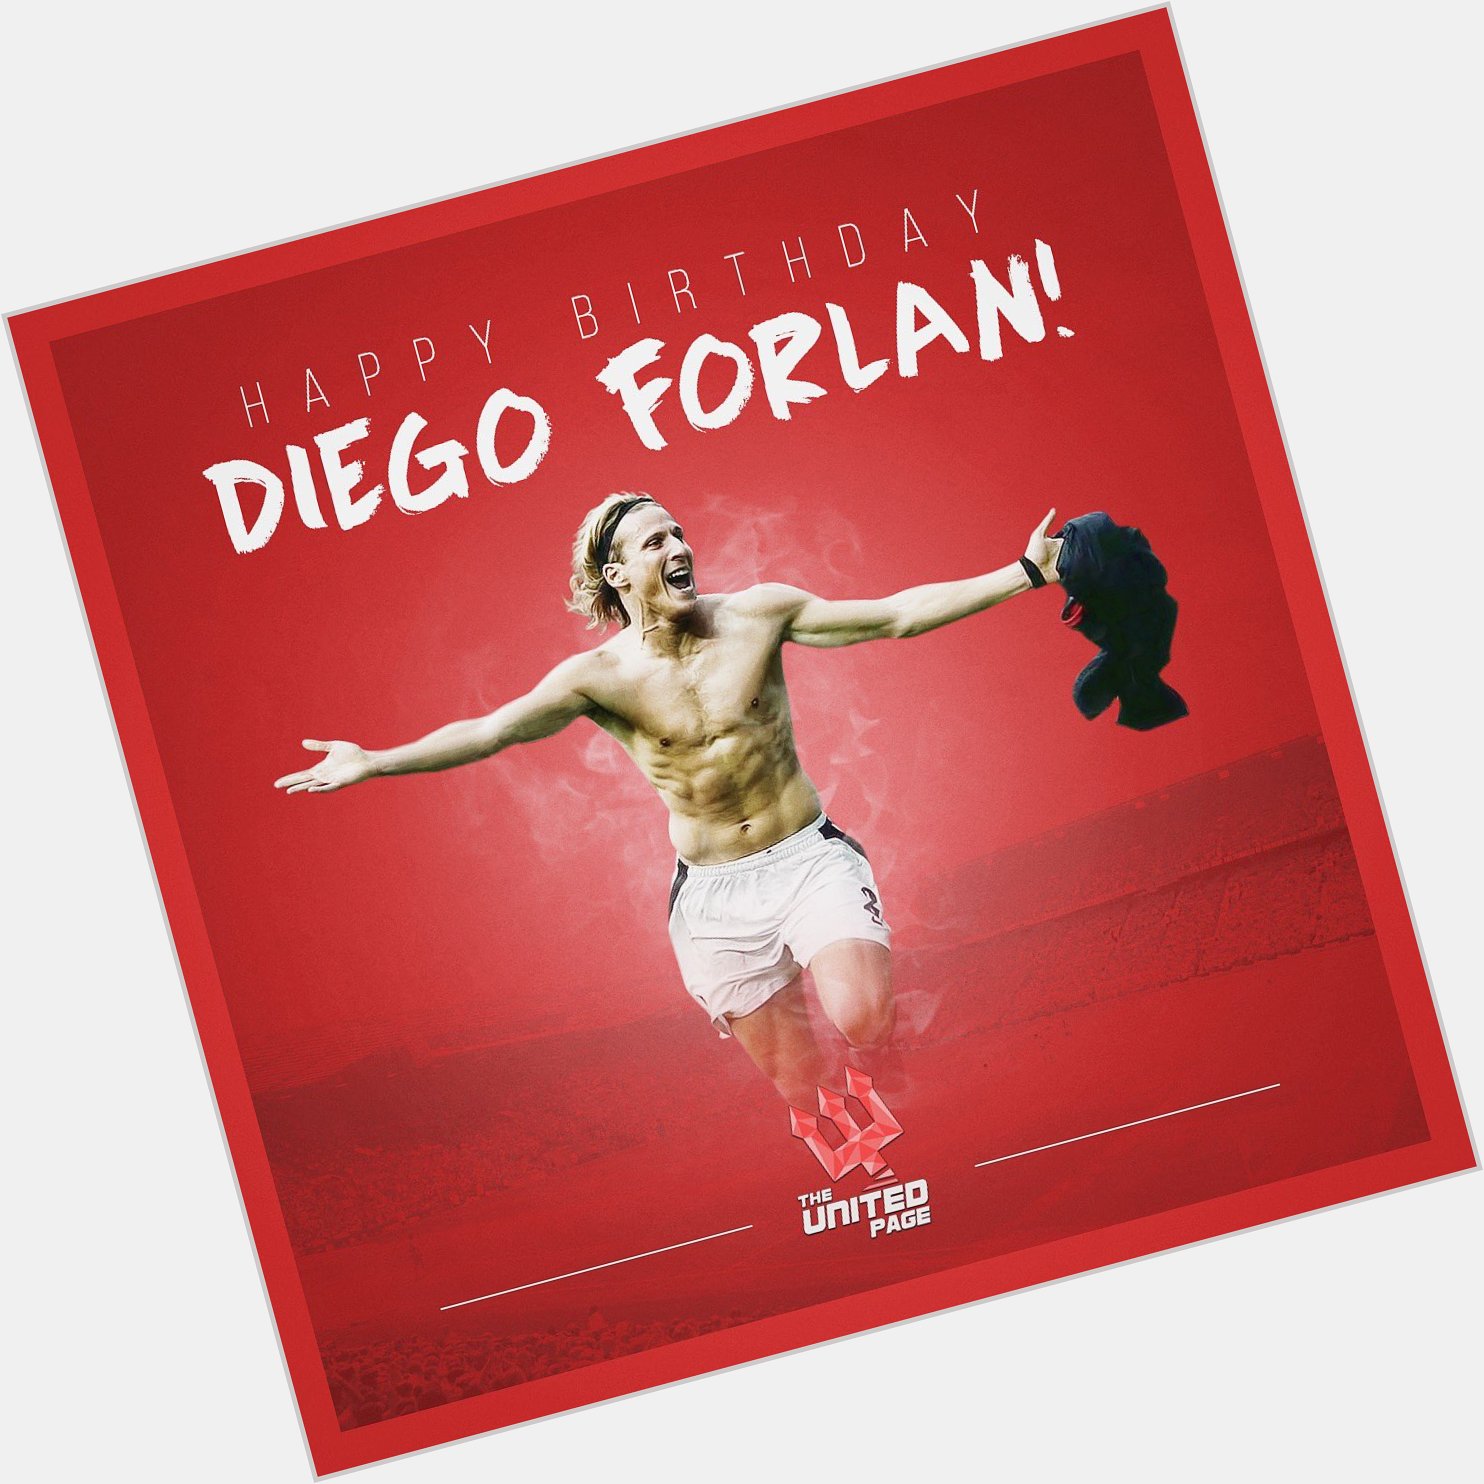 Happy birthday, Diego Forlan!   